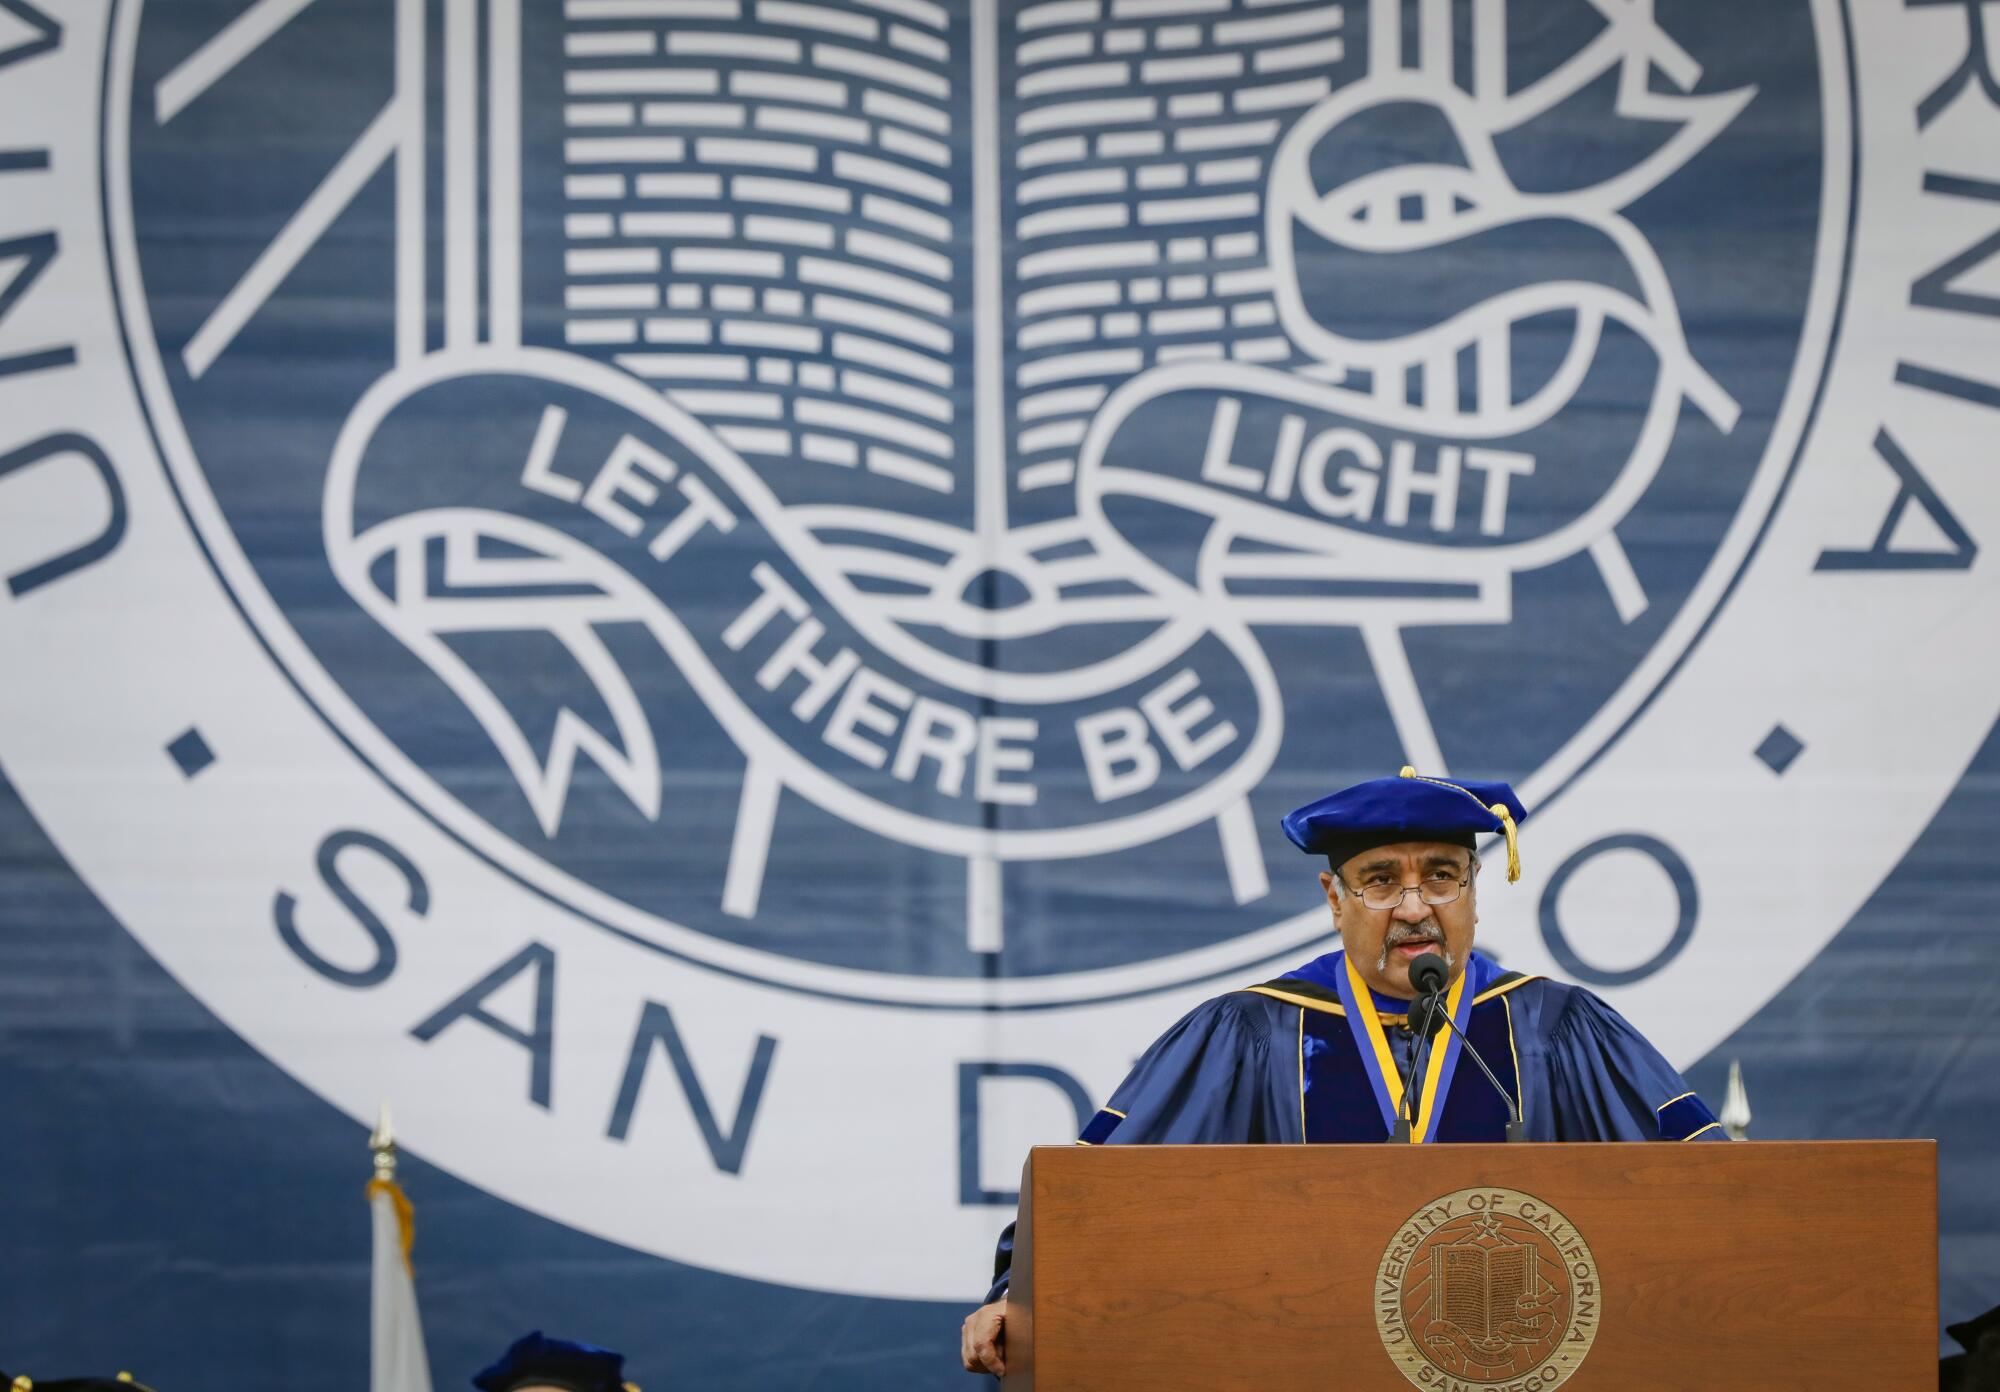 UC San Diego Chancellor Pradeep Khosla speaking at a lectern